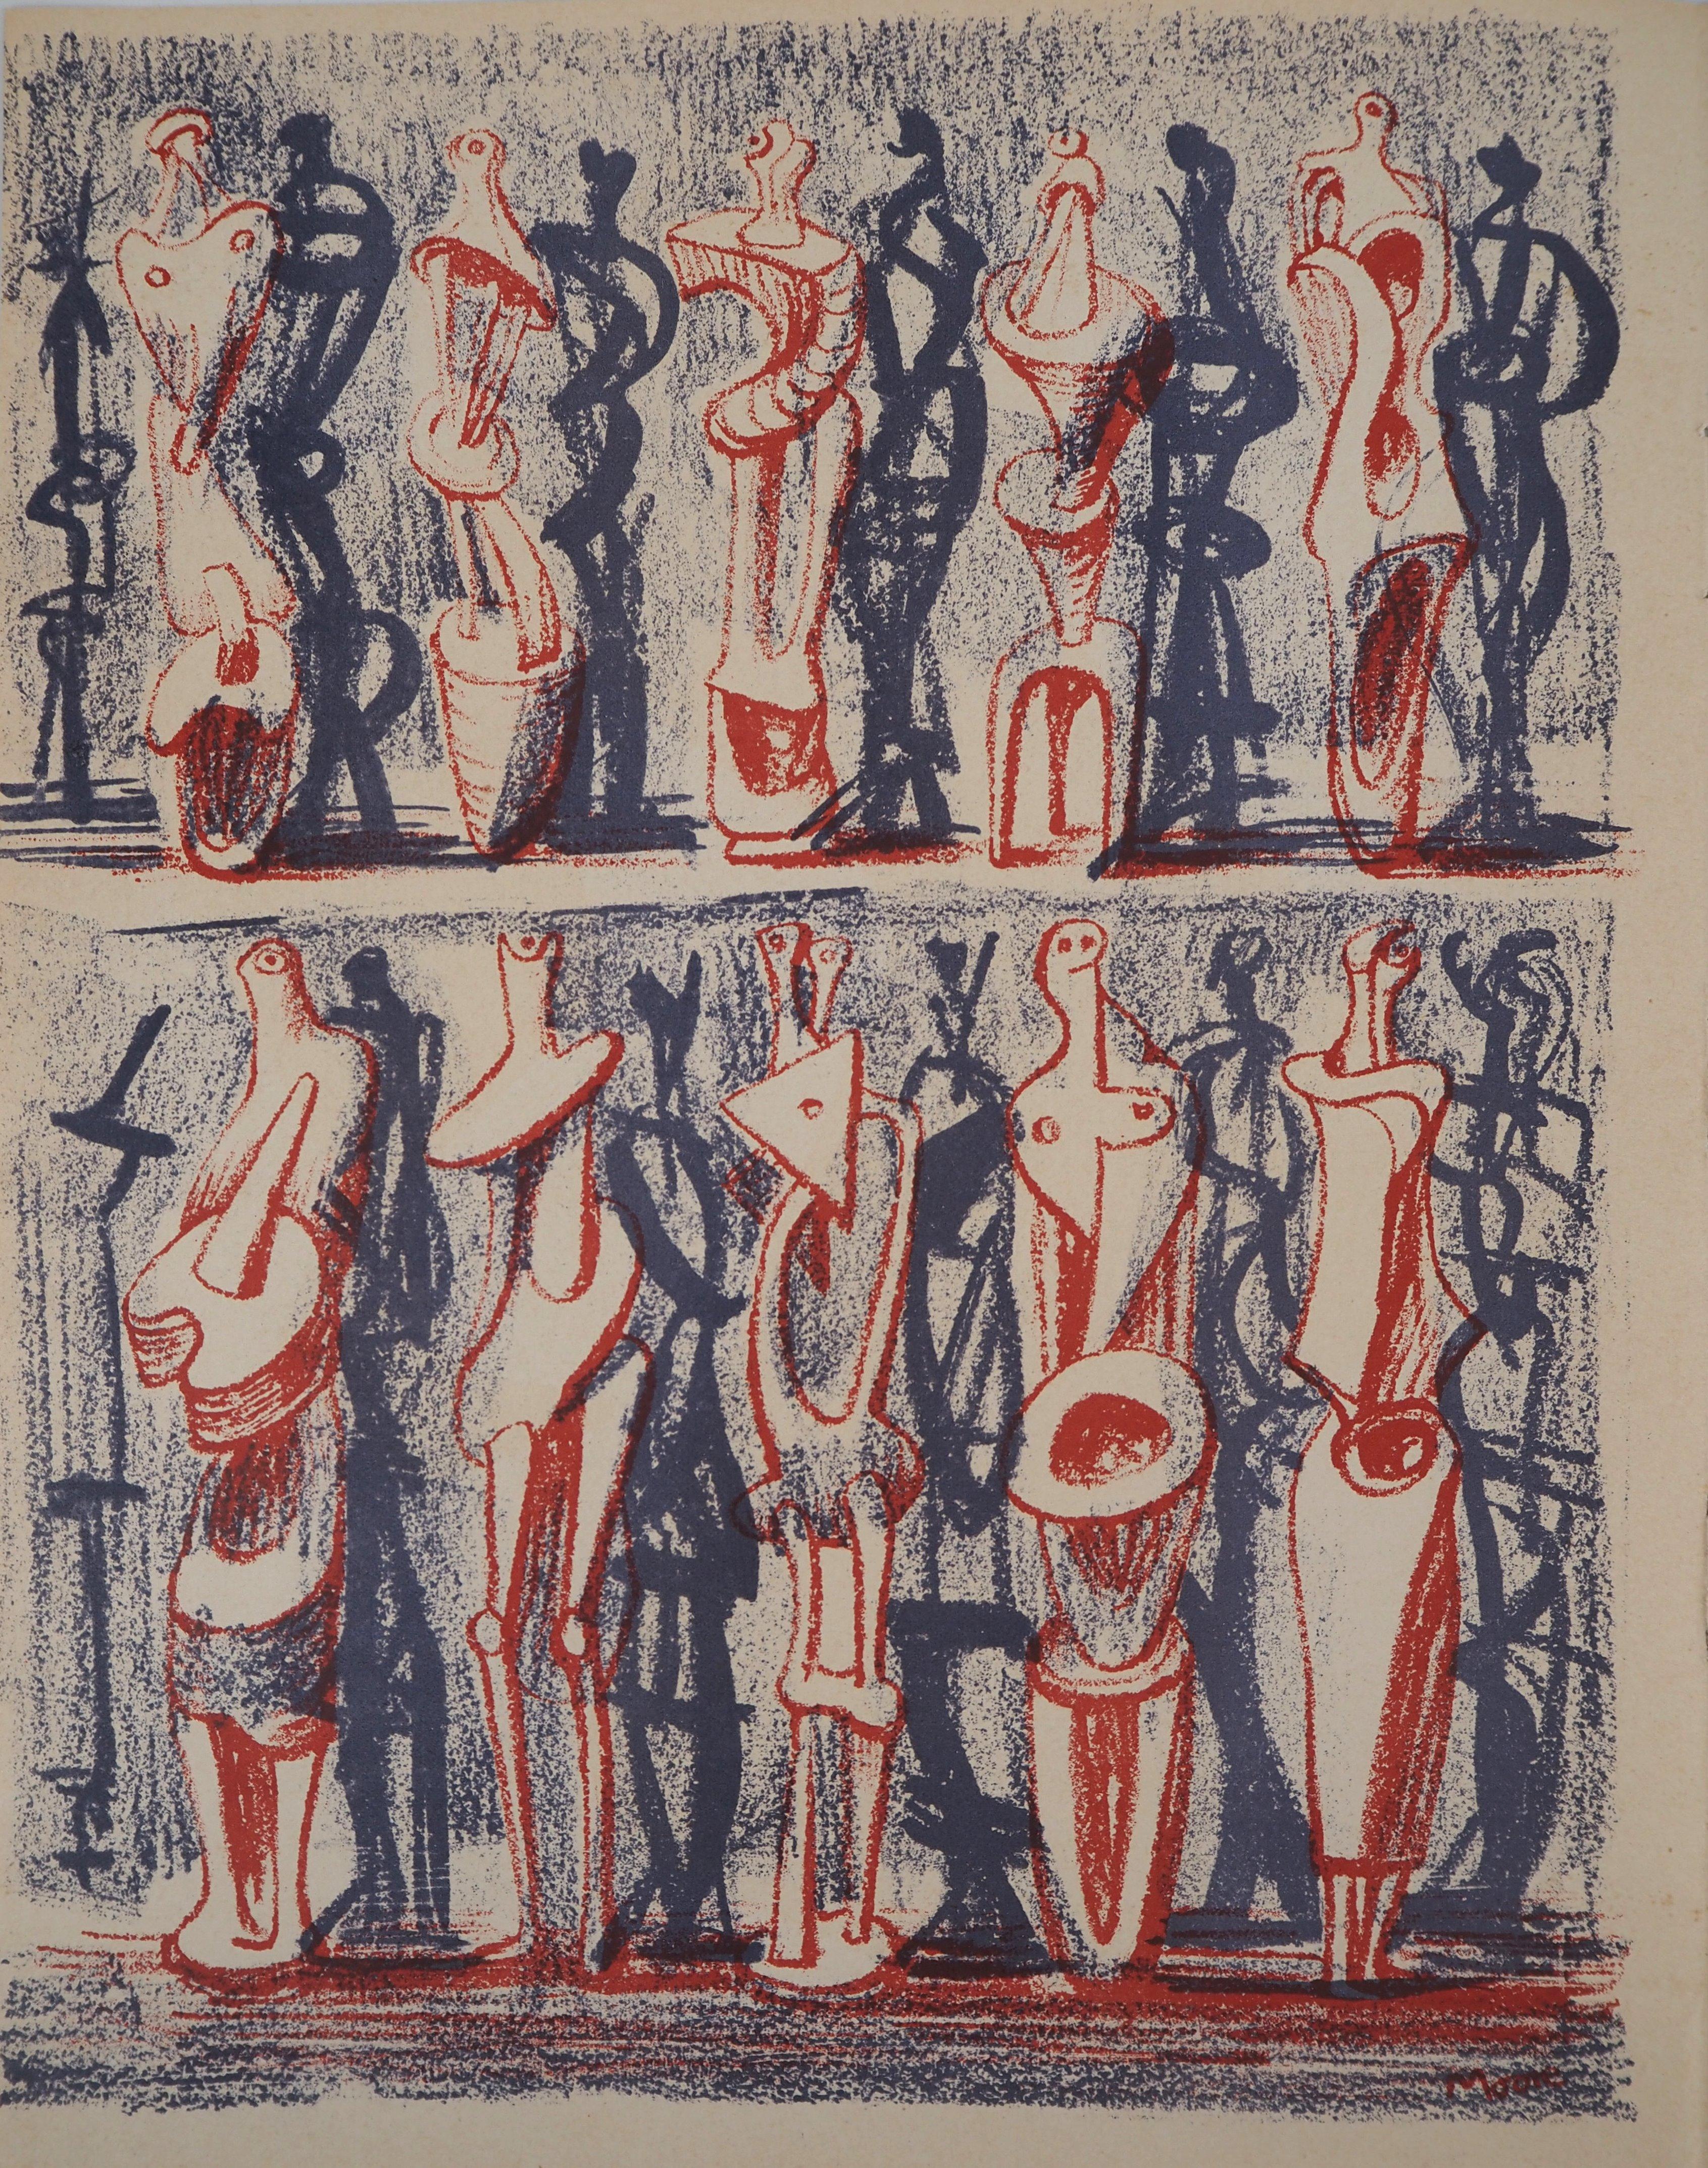 Henry Moore Figurative Print - Figures and Shadows - Original lithograph (Catalog raisonne Cramer #36)